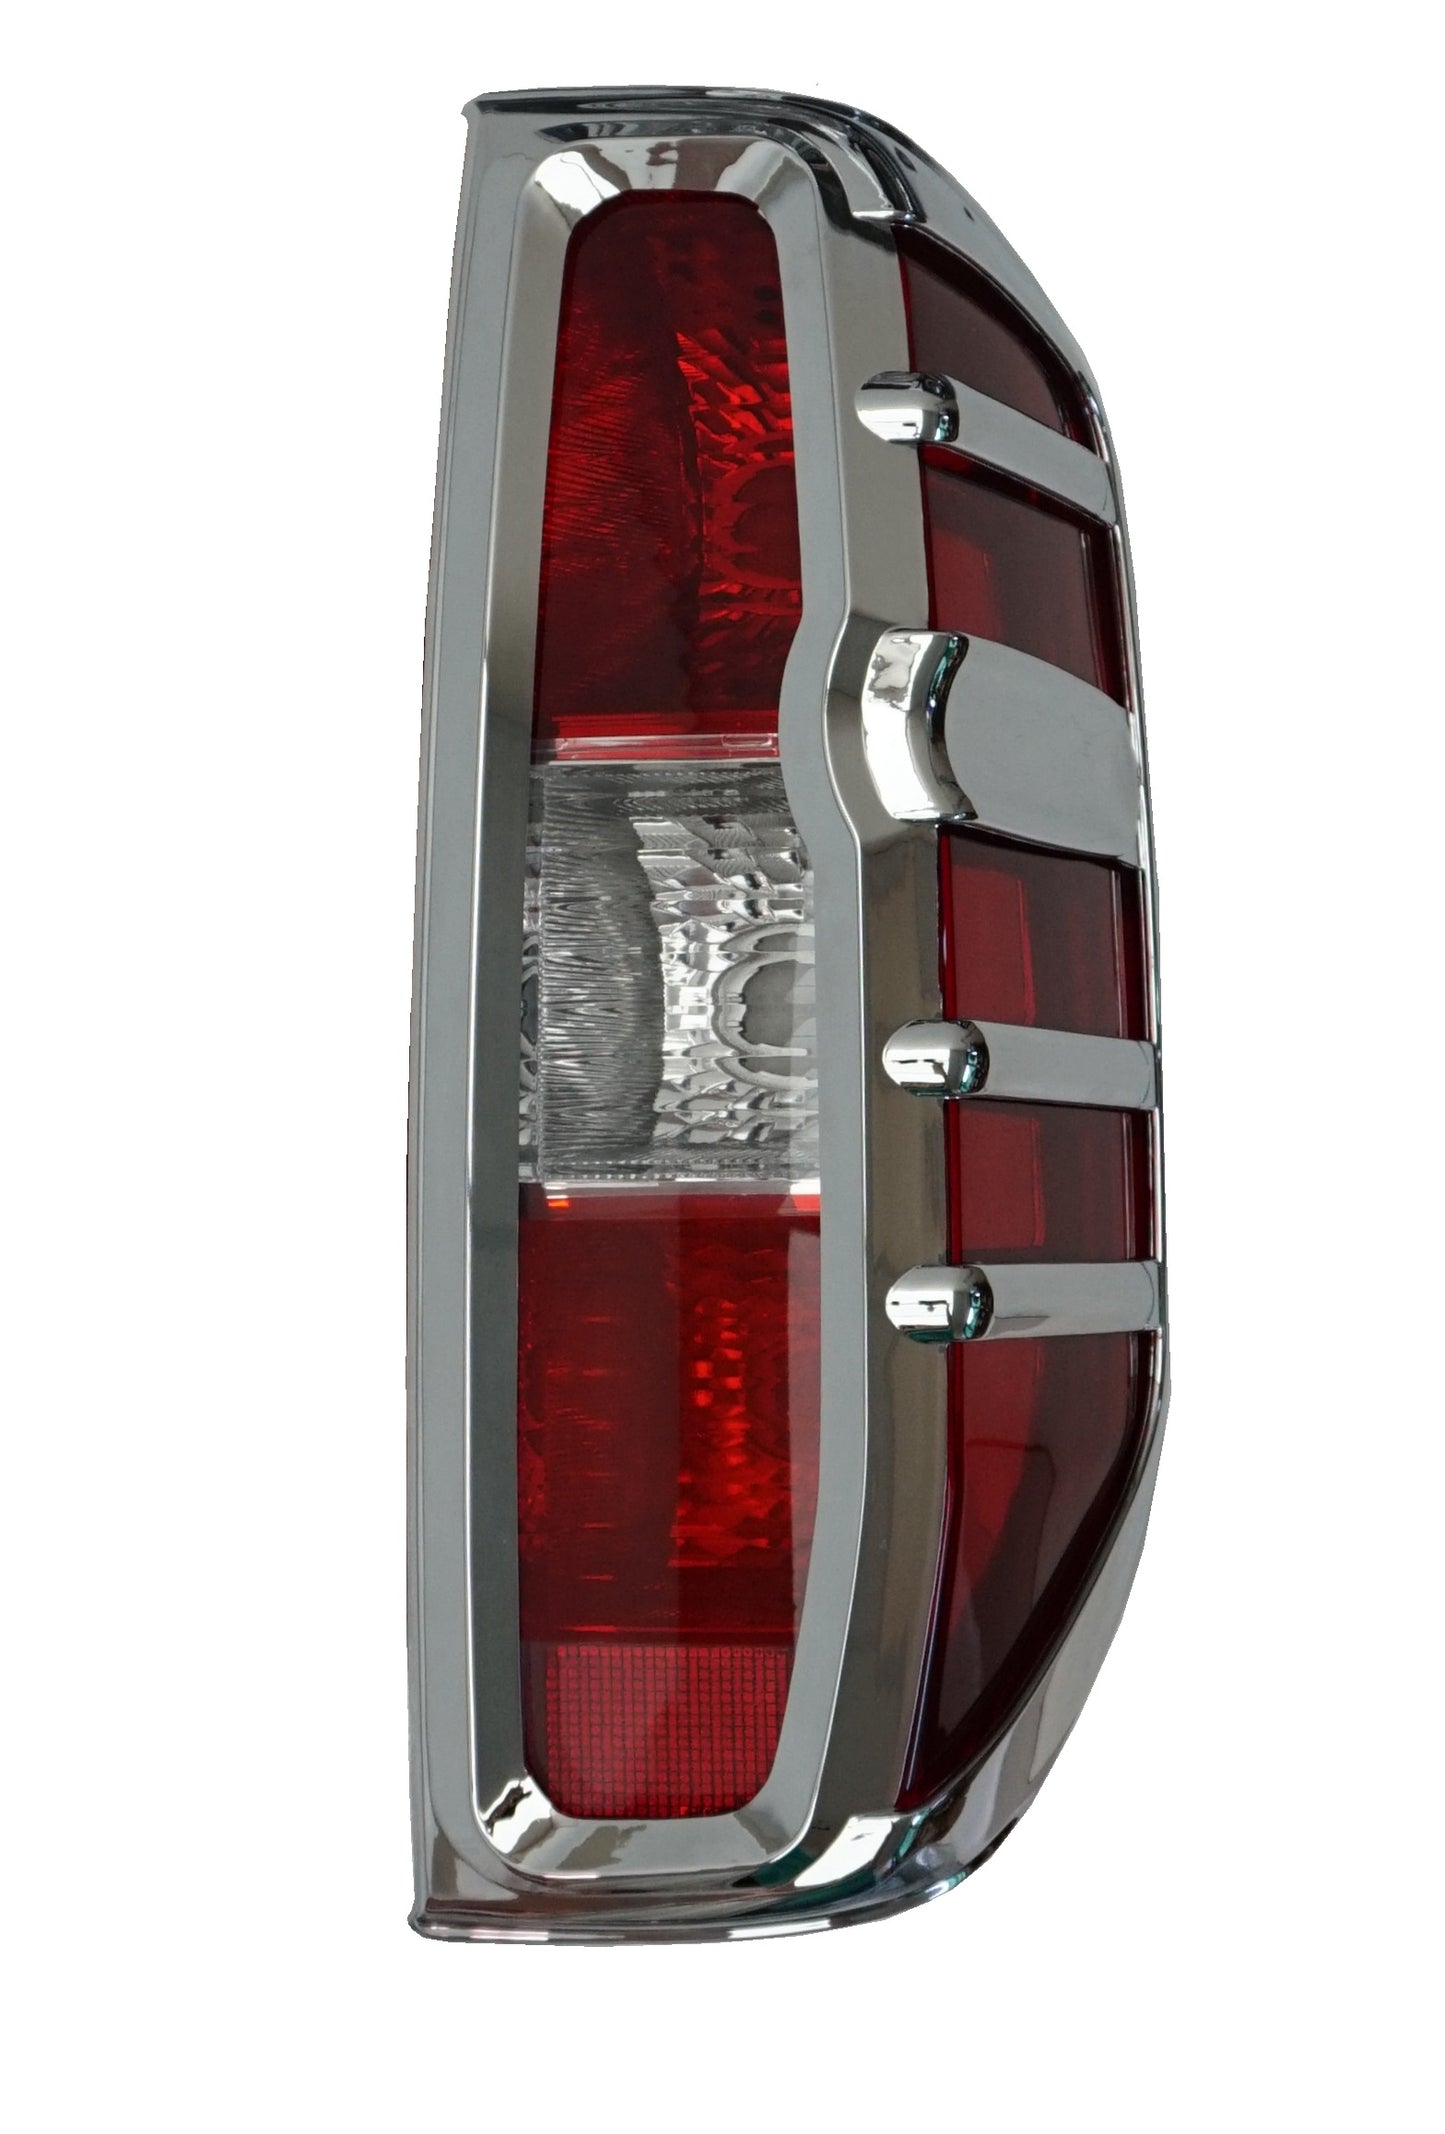 Chrome Rear Light Covers - ABS - Style 3 - for Nissan Navara D40